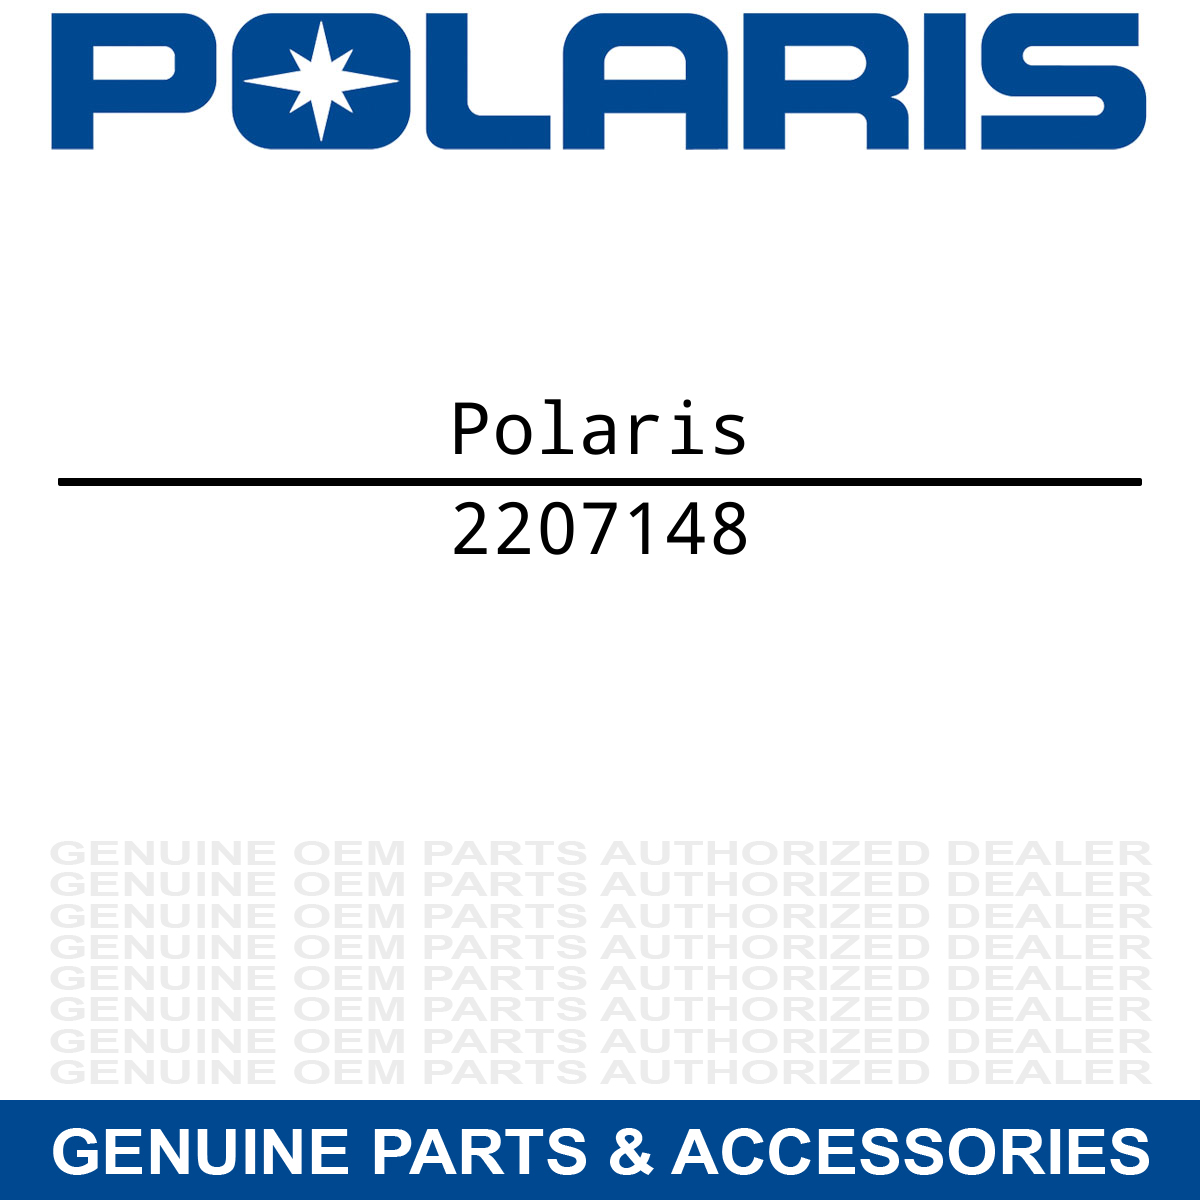 Polaris 2207148 Air Filters & Parts Indy 120 600 800 850